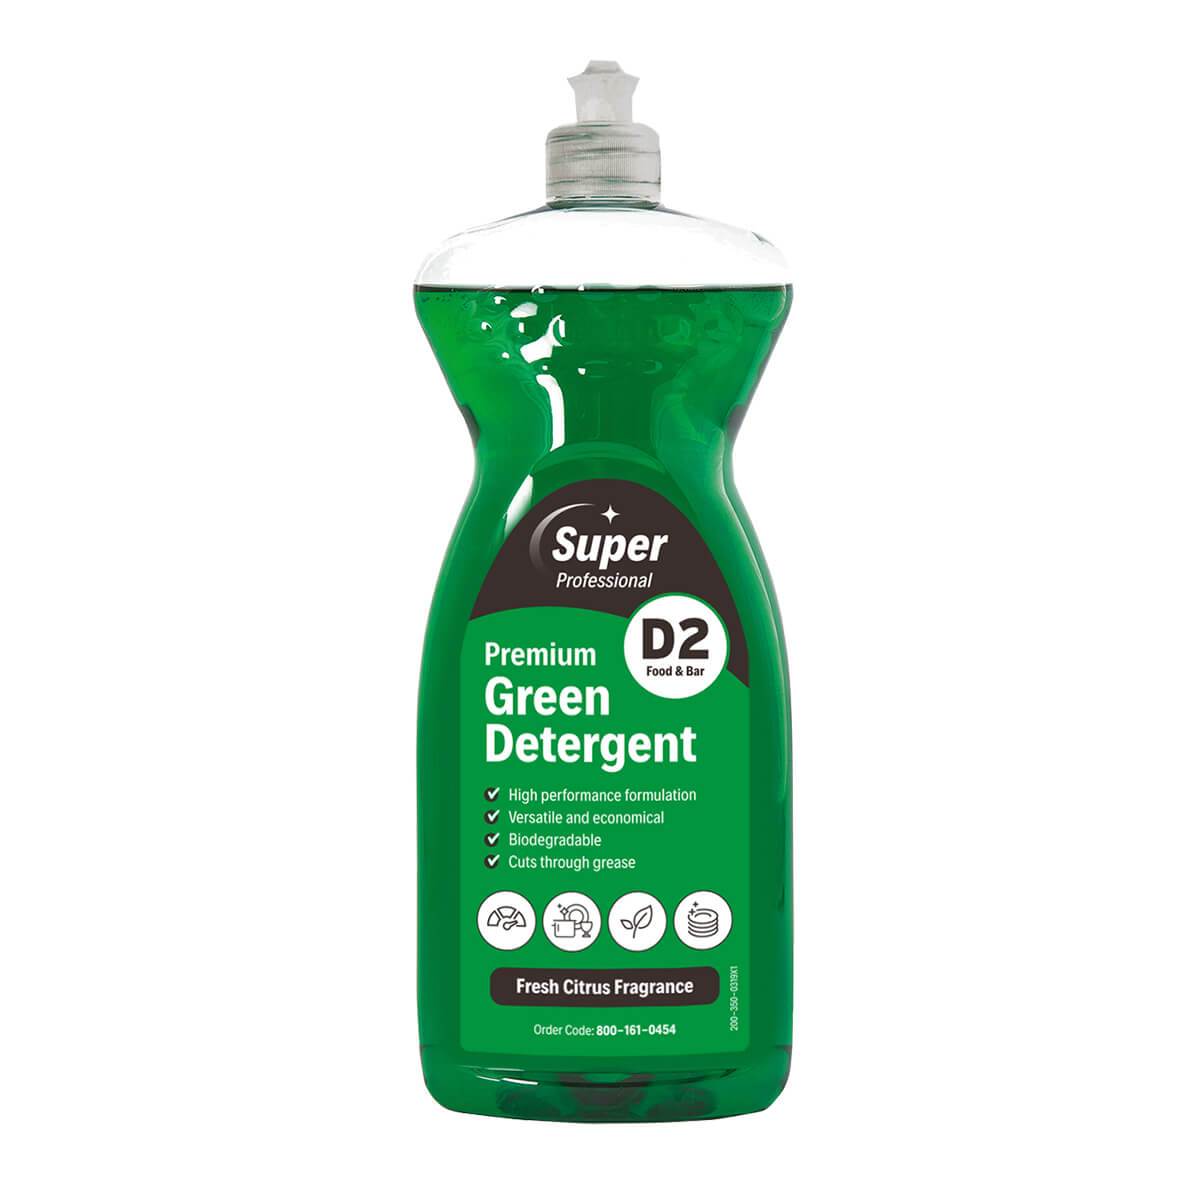 D2 Premium Green Detergent Washing Up Liquid 12x 1 Litre